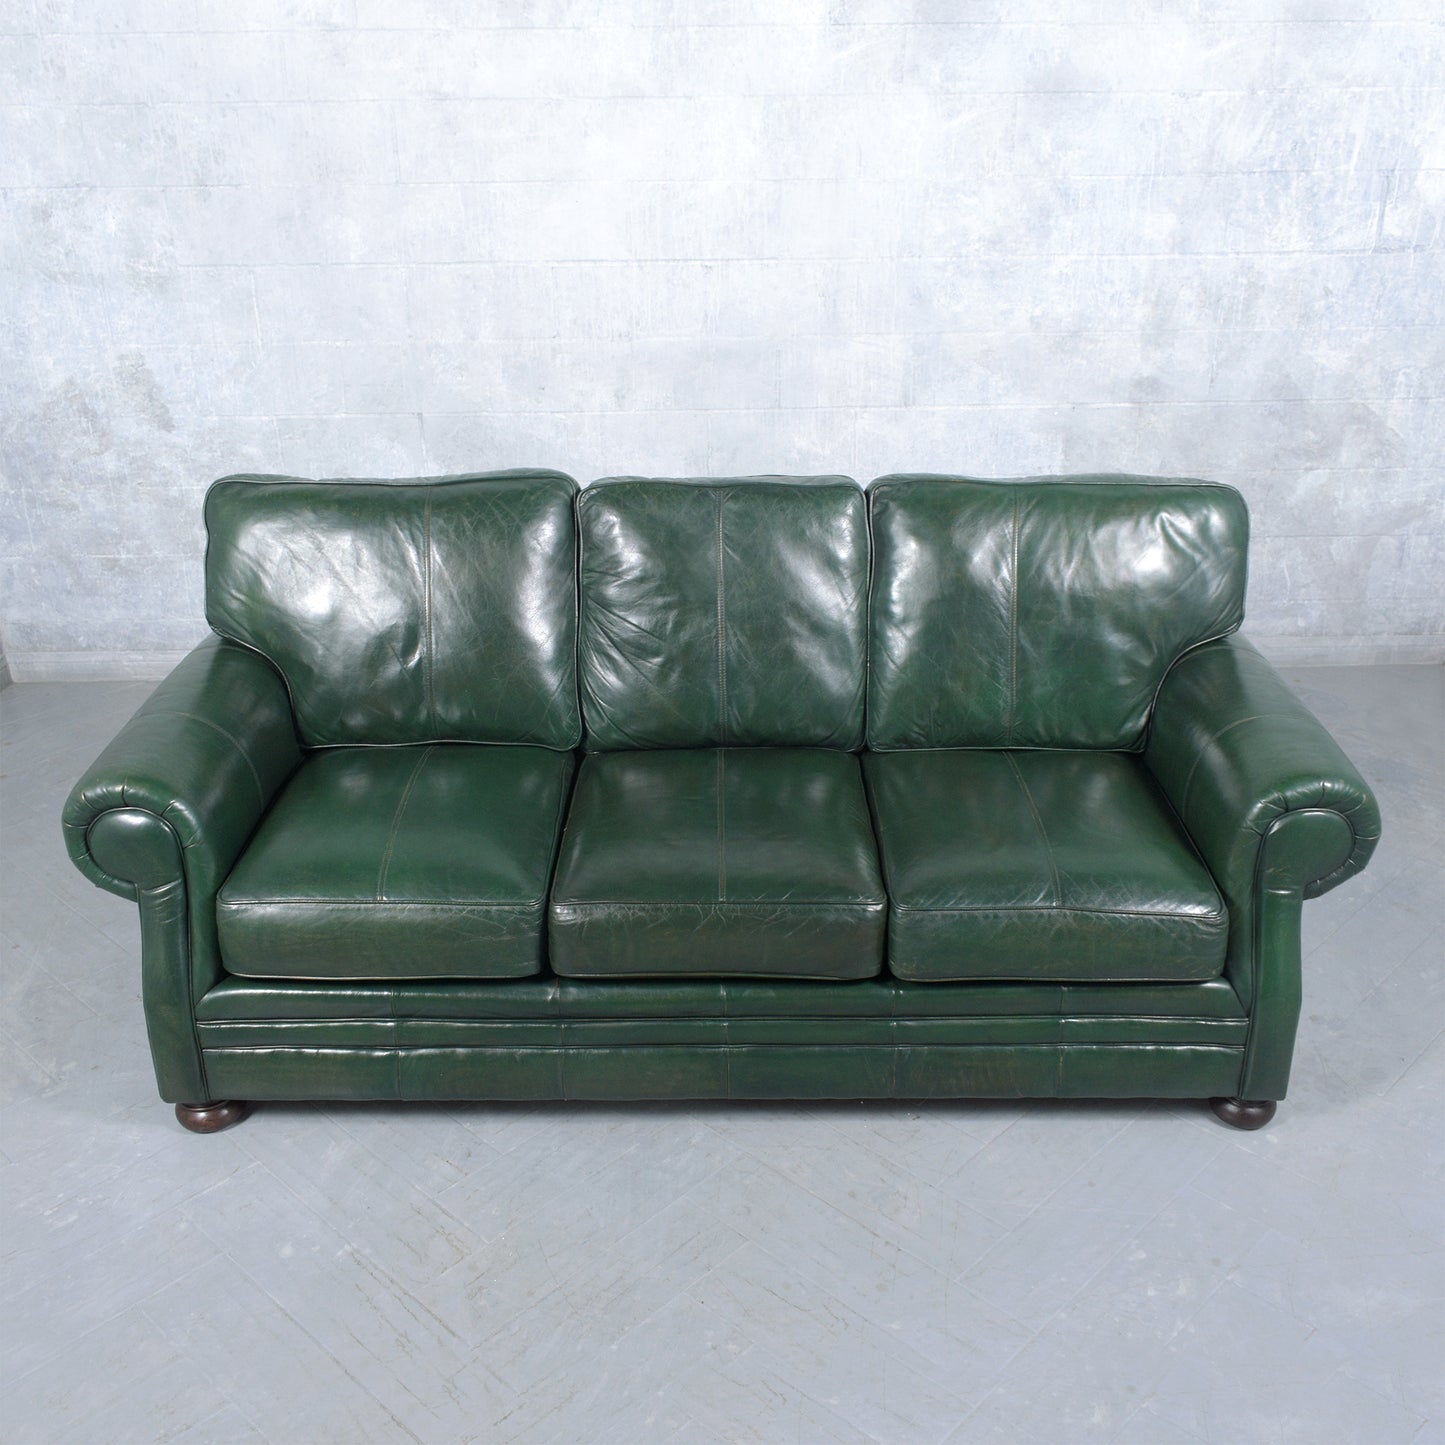 1980s Vintage Leather Sofa: Restored Dark Green Elegance